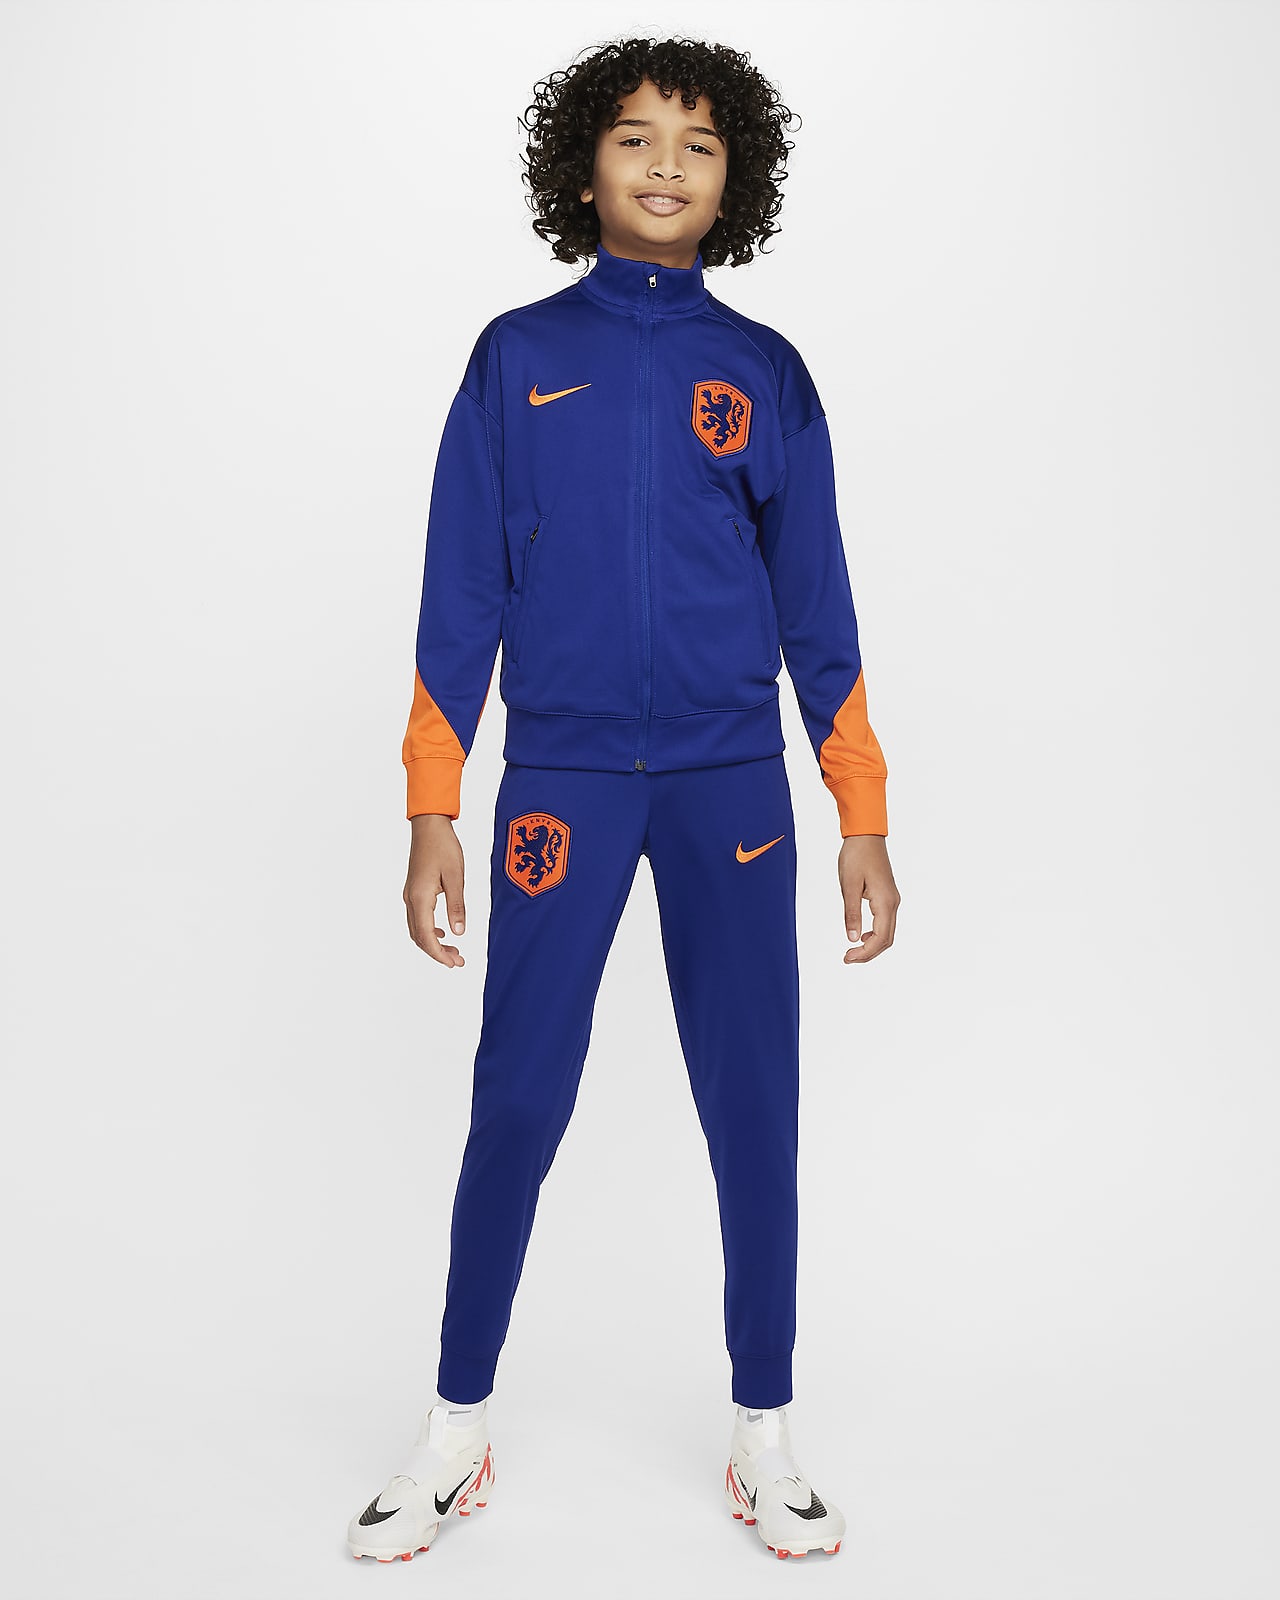 Nederland Strike Nike Dri-FIT knit voetbaltrainingspak voor kids